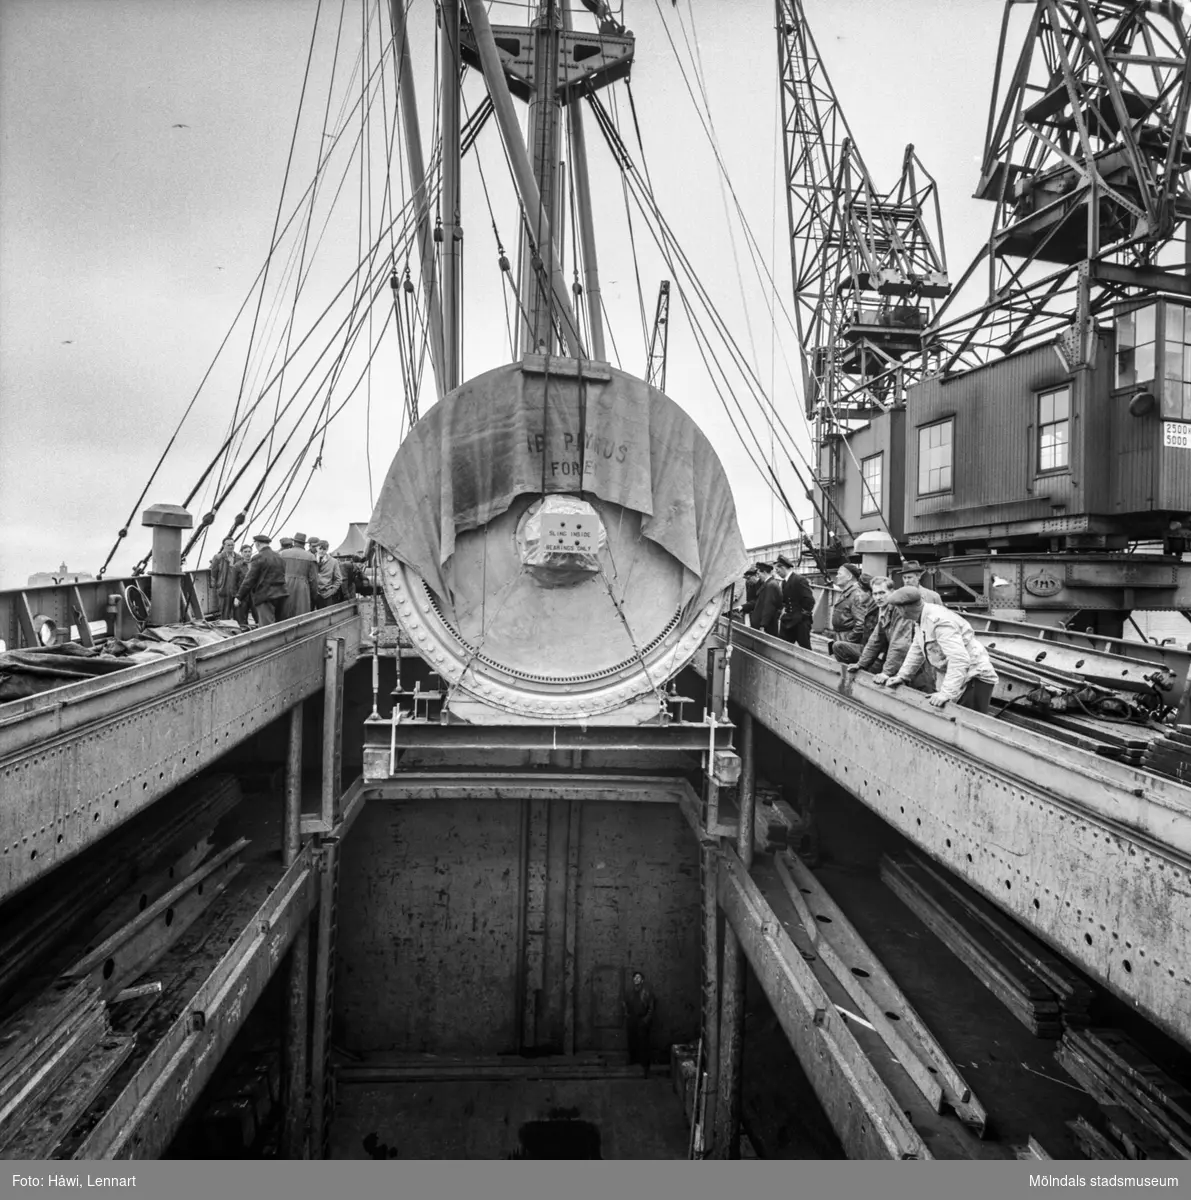 Transport av pappersbruket Papyrus PM2 yankeecylinder på fartyg. Göteborgs hamn, 16/4 1957.